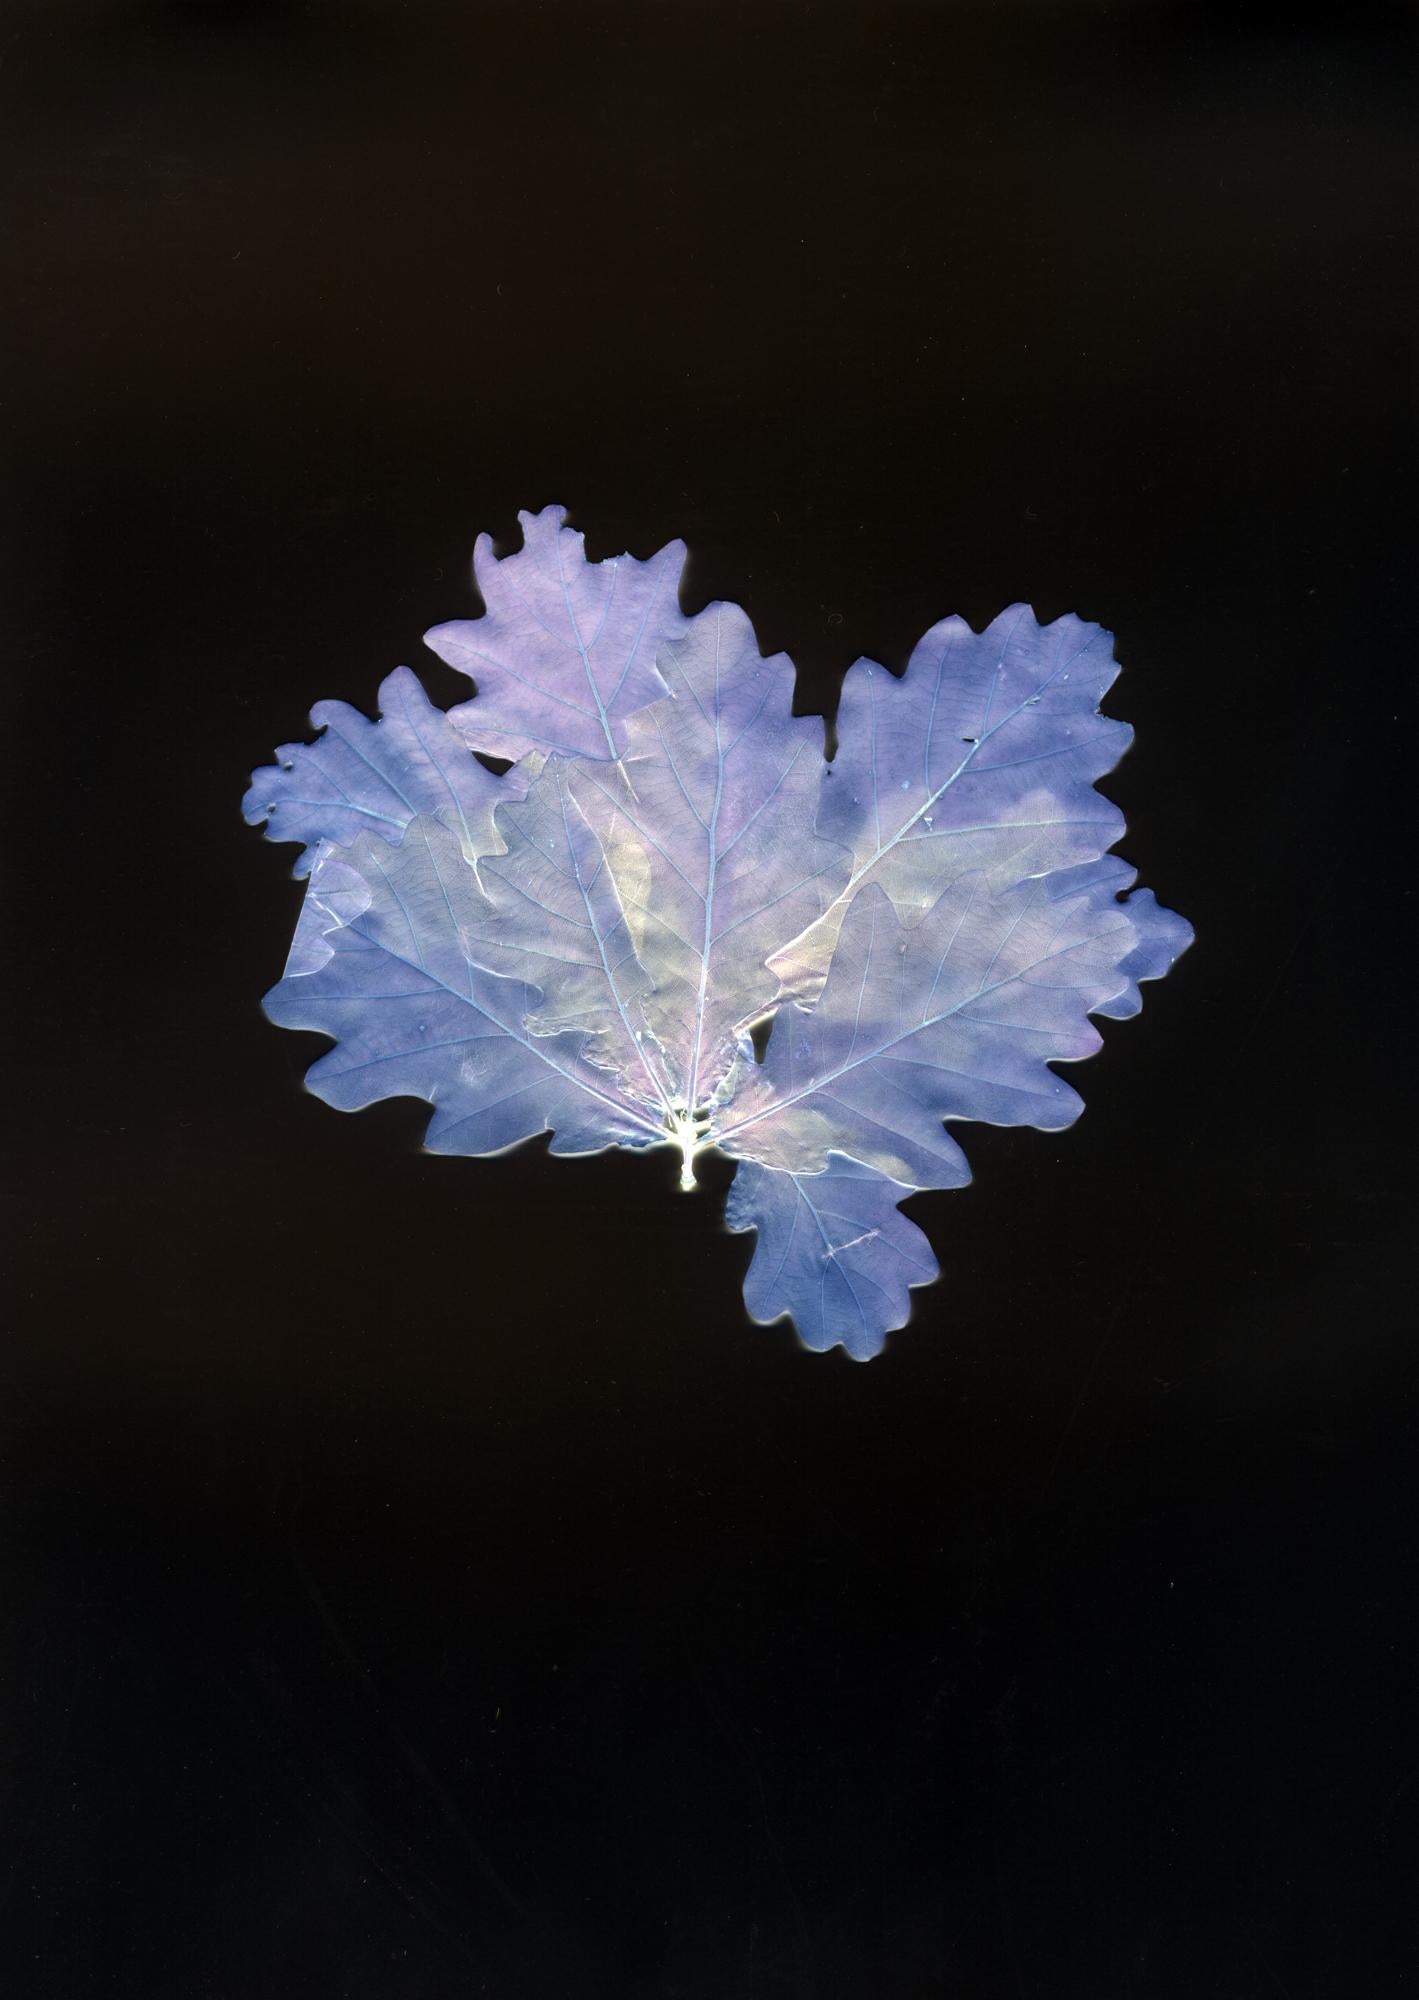 Michael Huey Landscape Photograph - Vlasim Oak Leaves - 21st Century Still Life Contemporary Photography C-Print